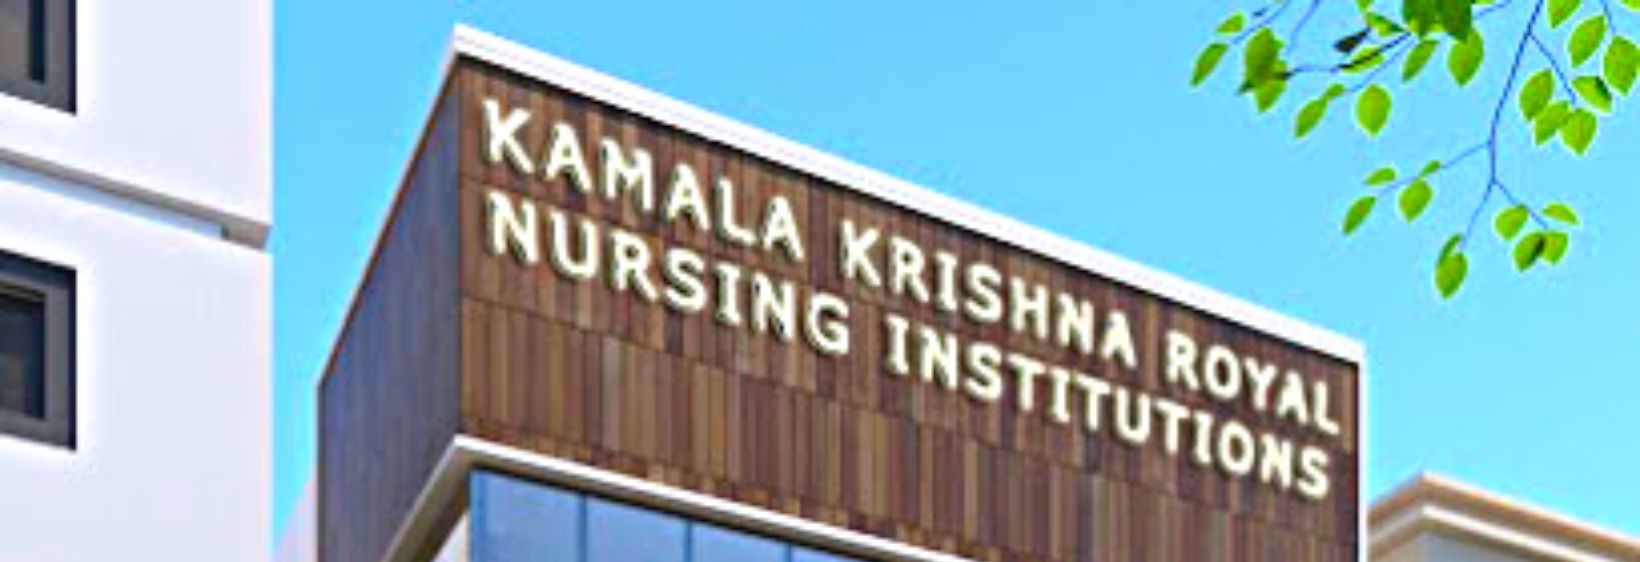 Kamala Krishna Royale Nursing College - Bangalore